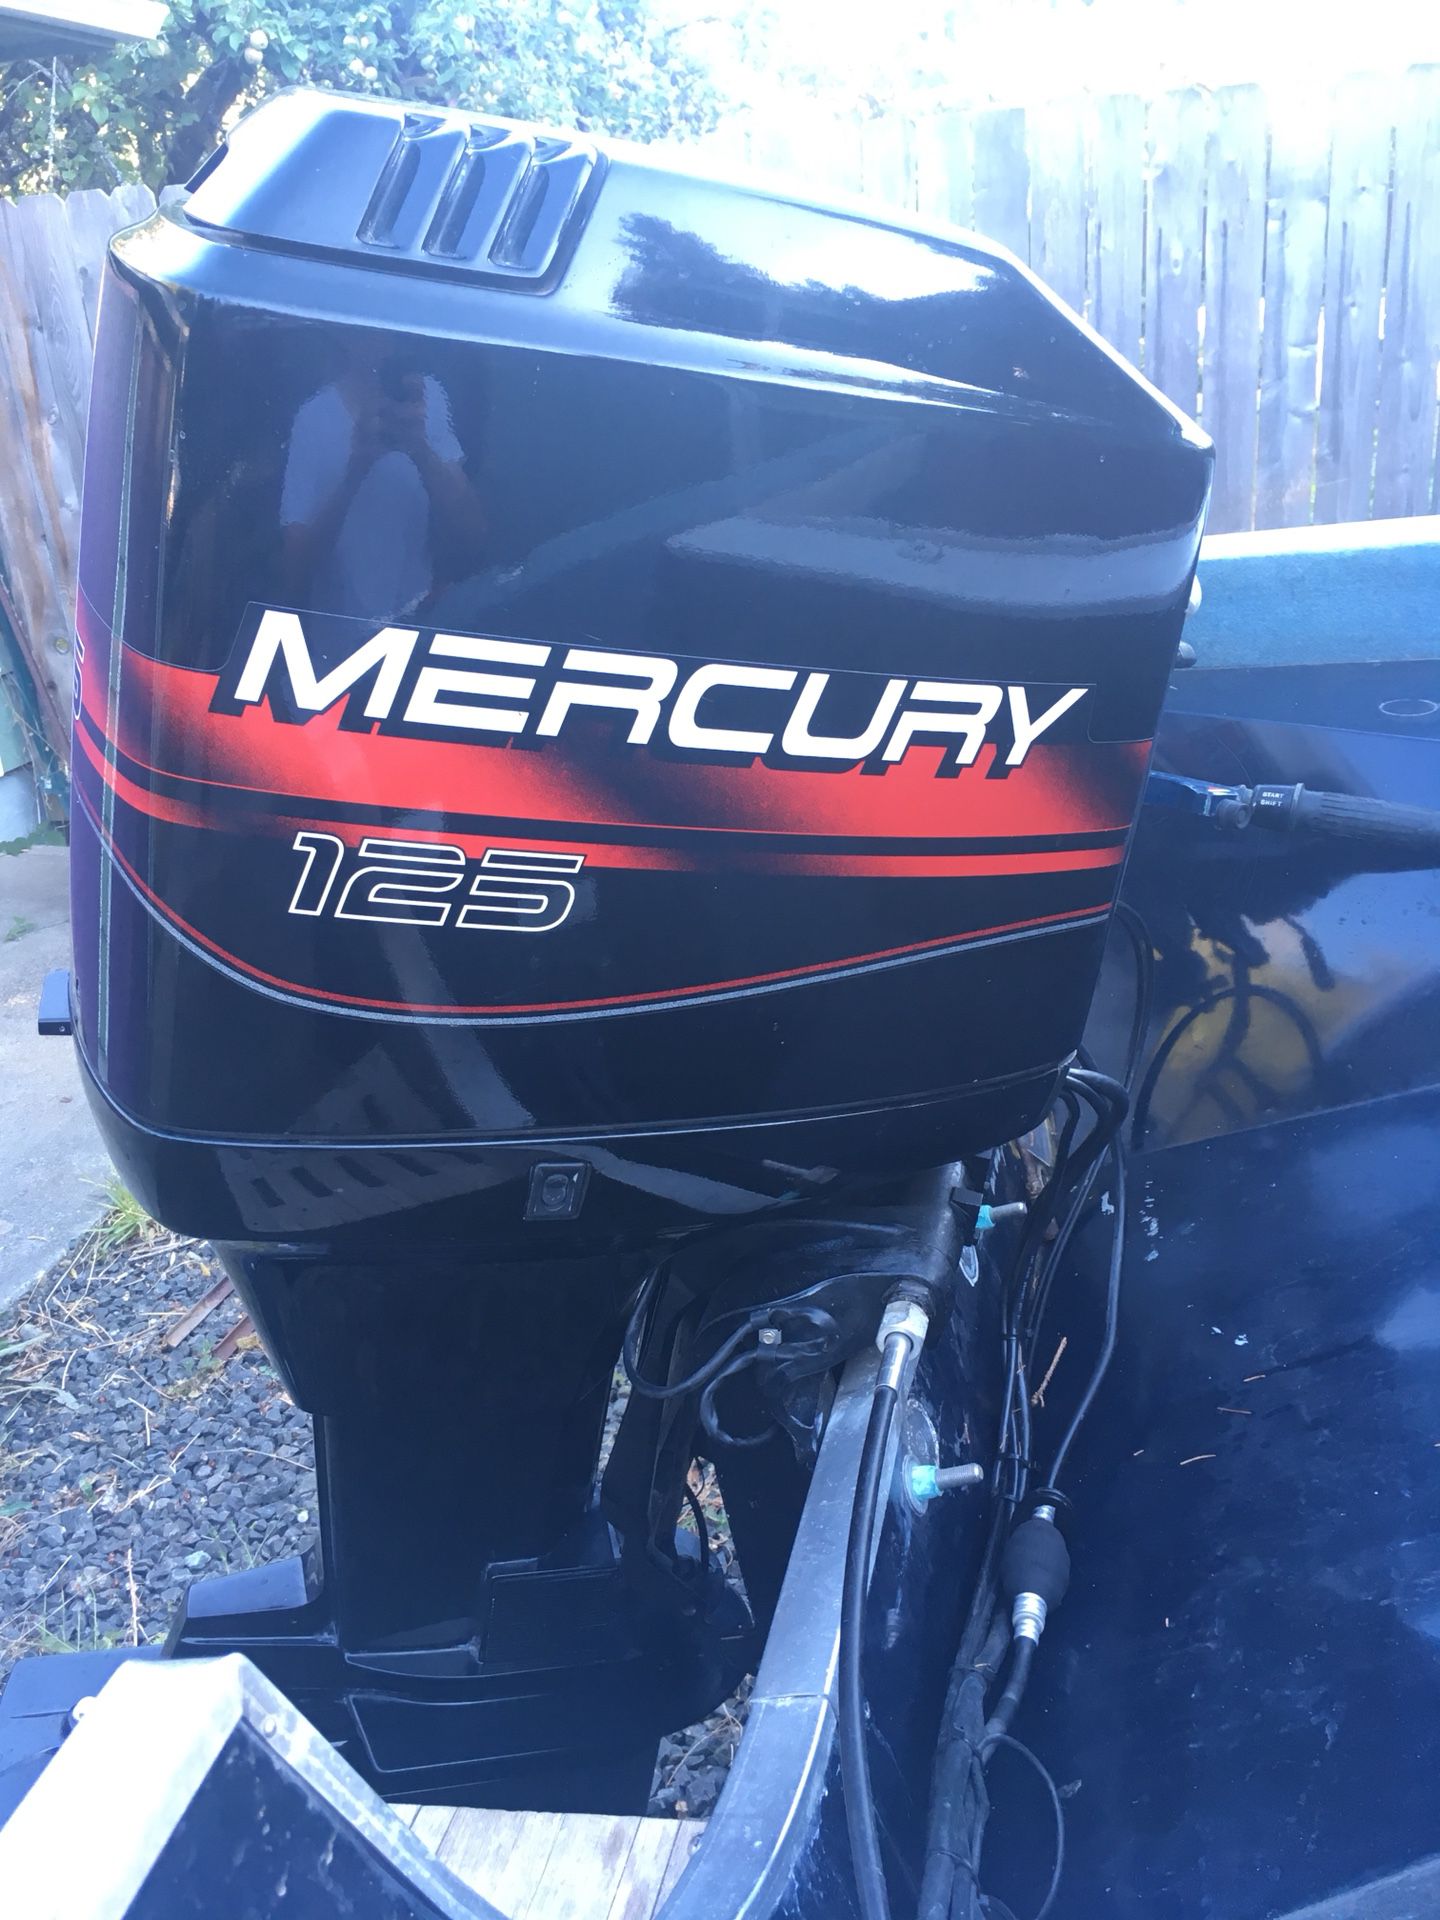 125 Mercury outboard